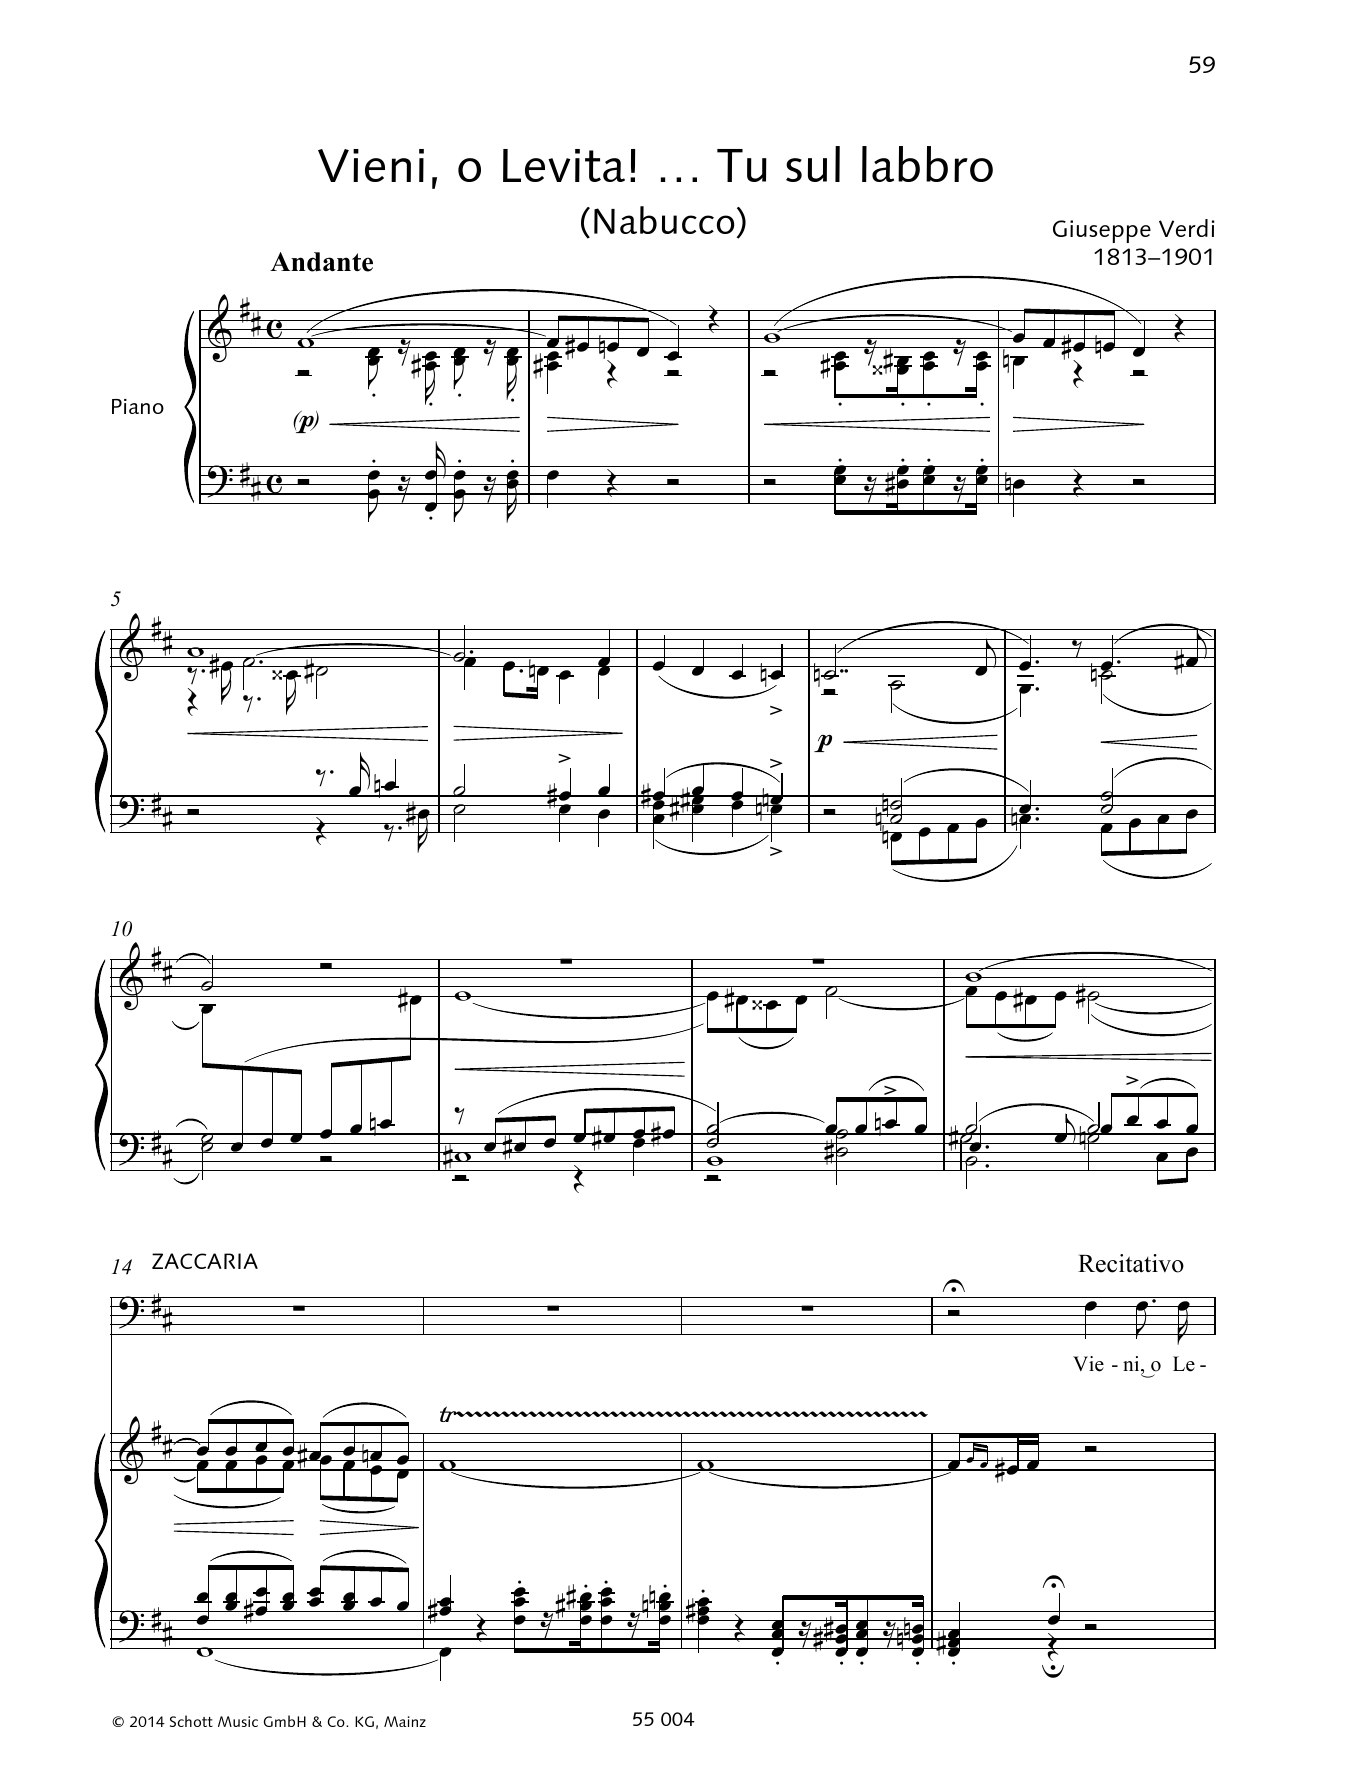 Download Giuseppe Verdi Vieni, o Levita!... Tu sul labbro Sheet Music and learn how to play Piano & Vocal PDF digital score in minutes